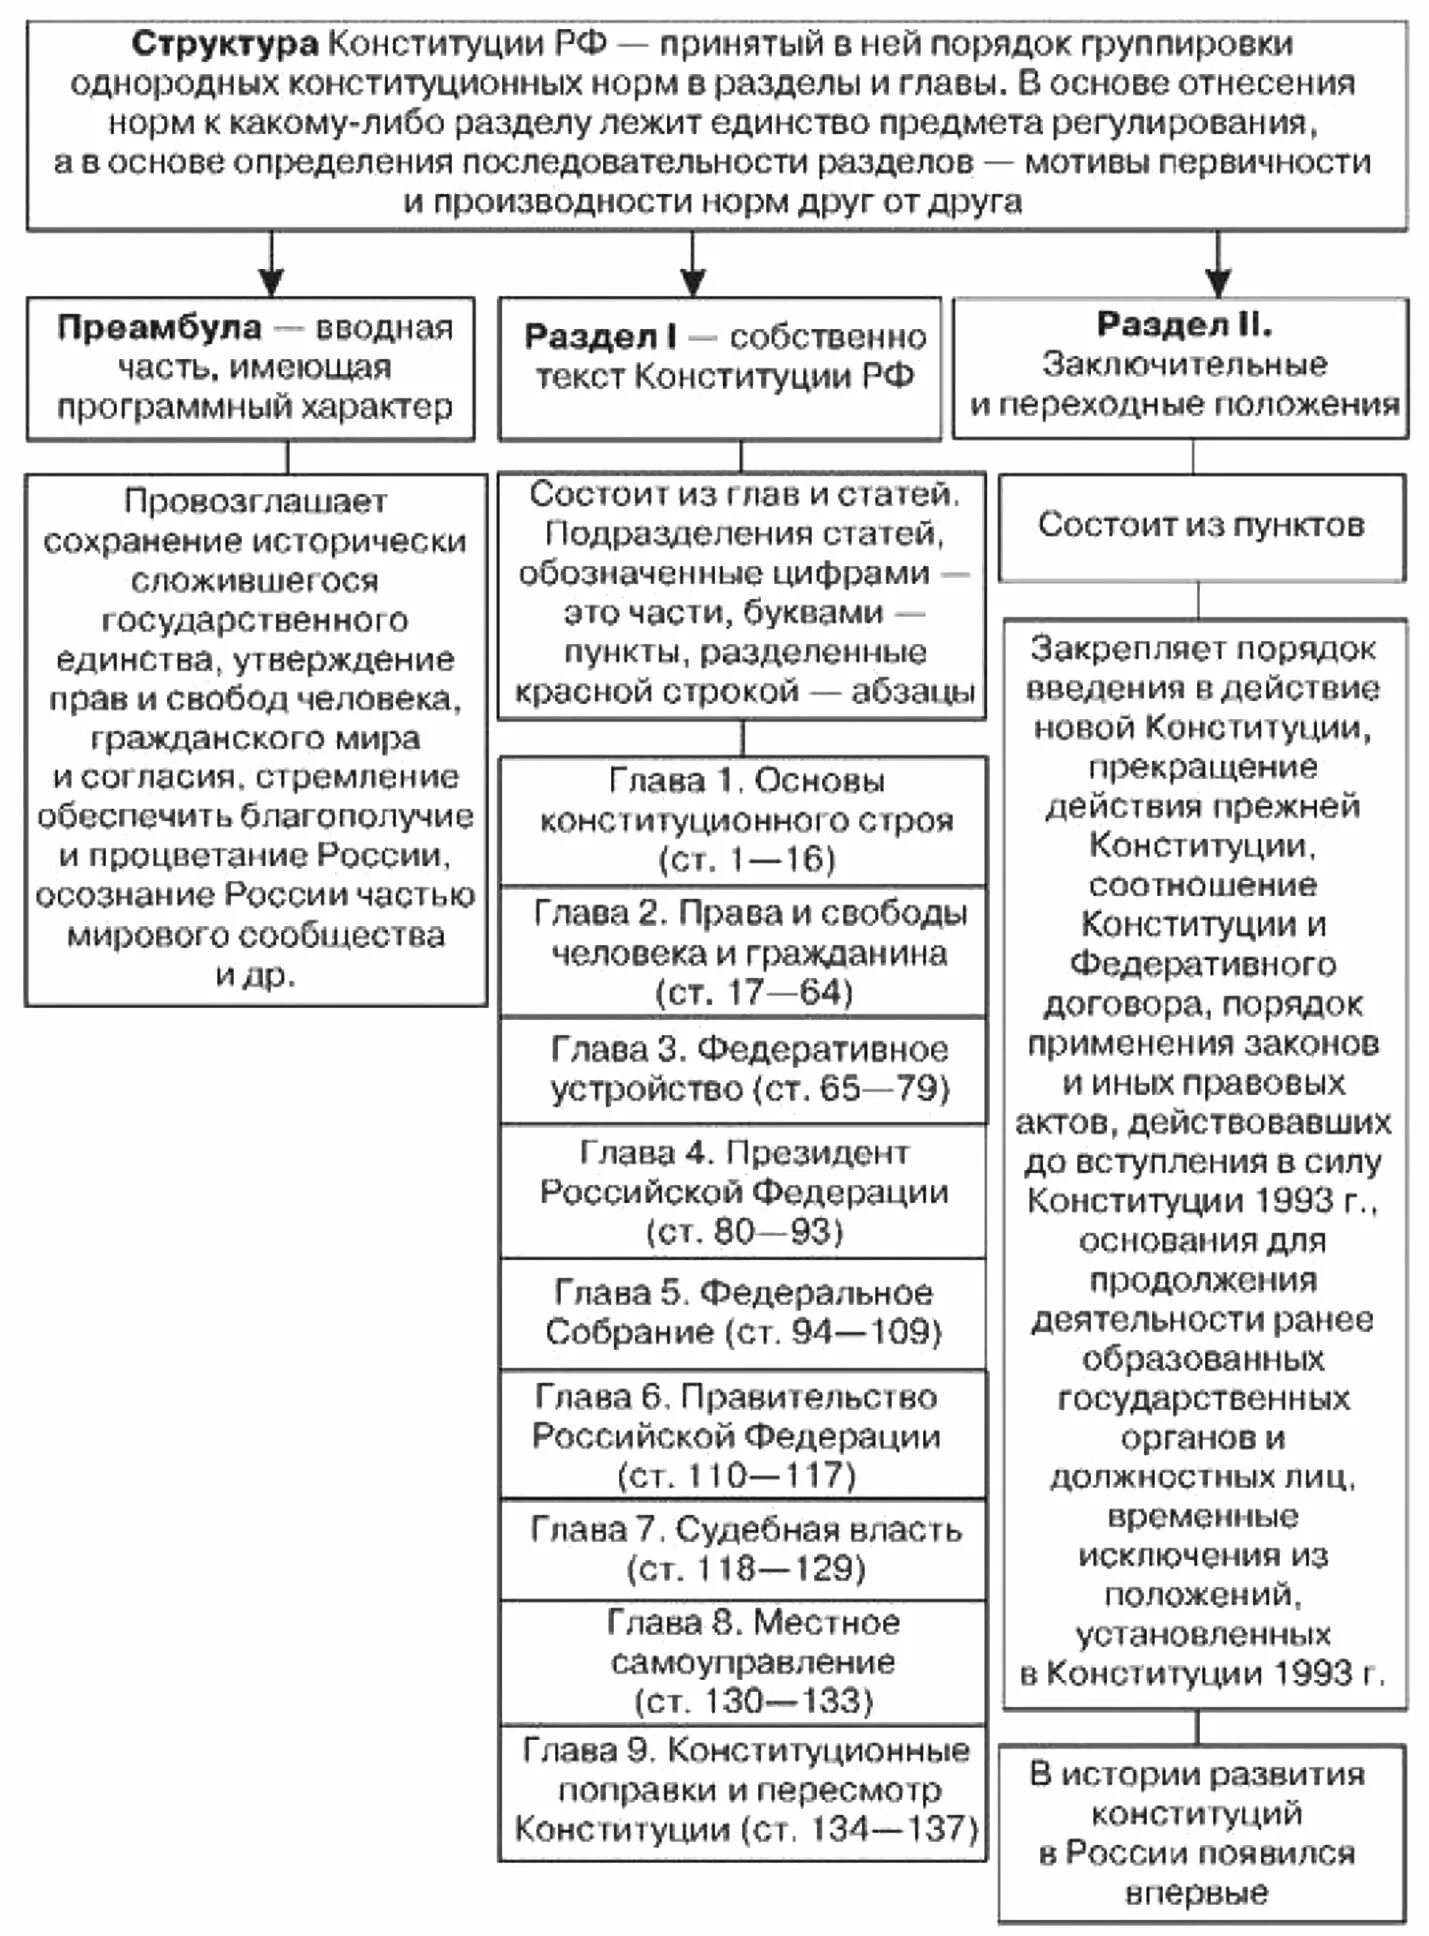 Структура Конституции РФ таблица. Структура Конституции РФ схема. Структура Конституции 1993 года схема. Структура Конституции Российской Федерации 1993 г., схема.